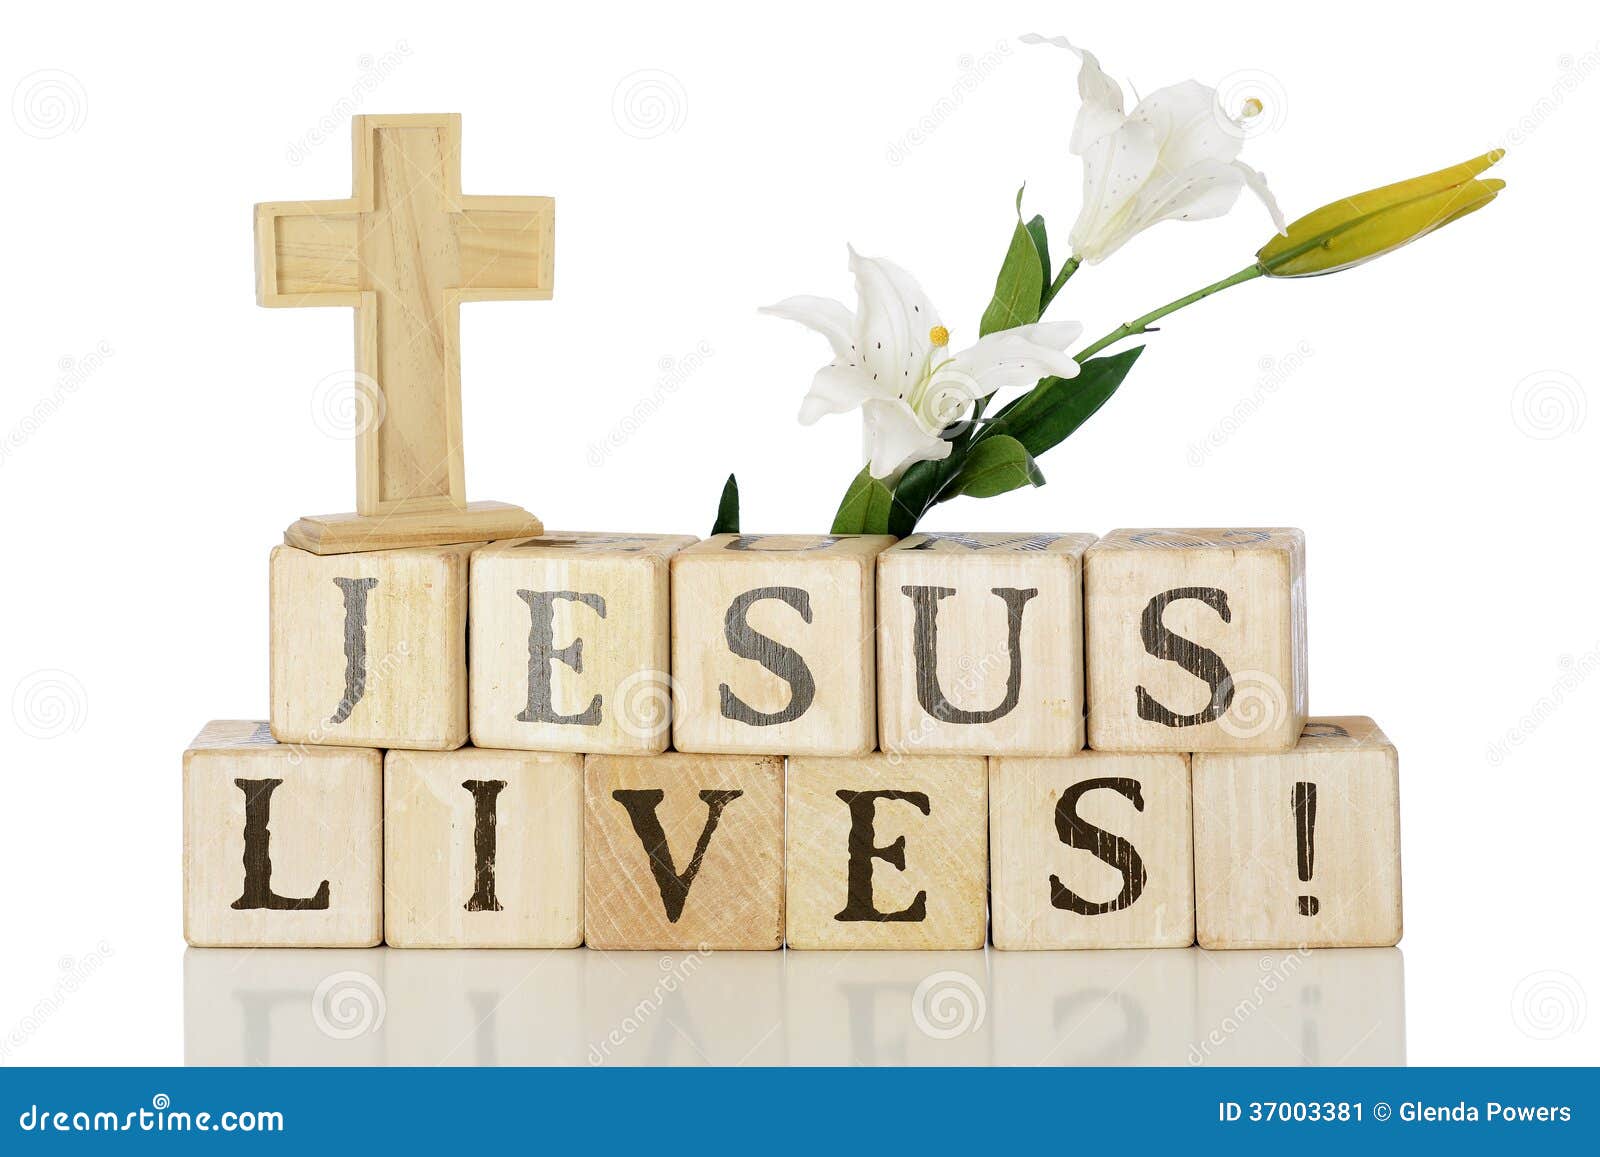 jesus lives!